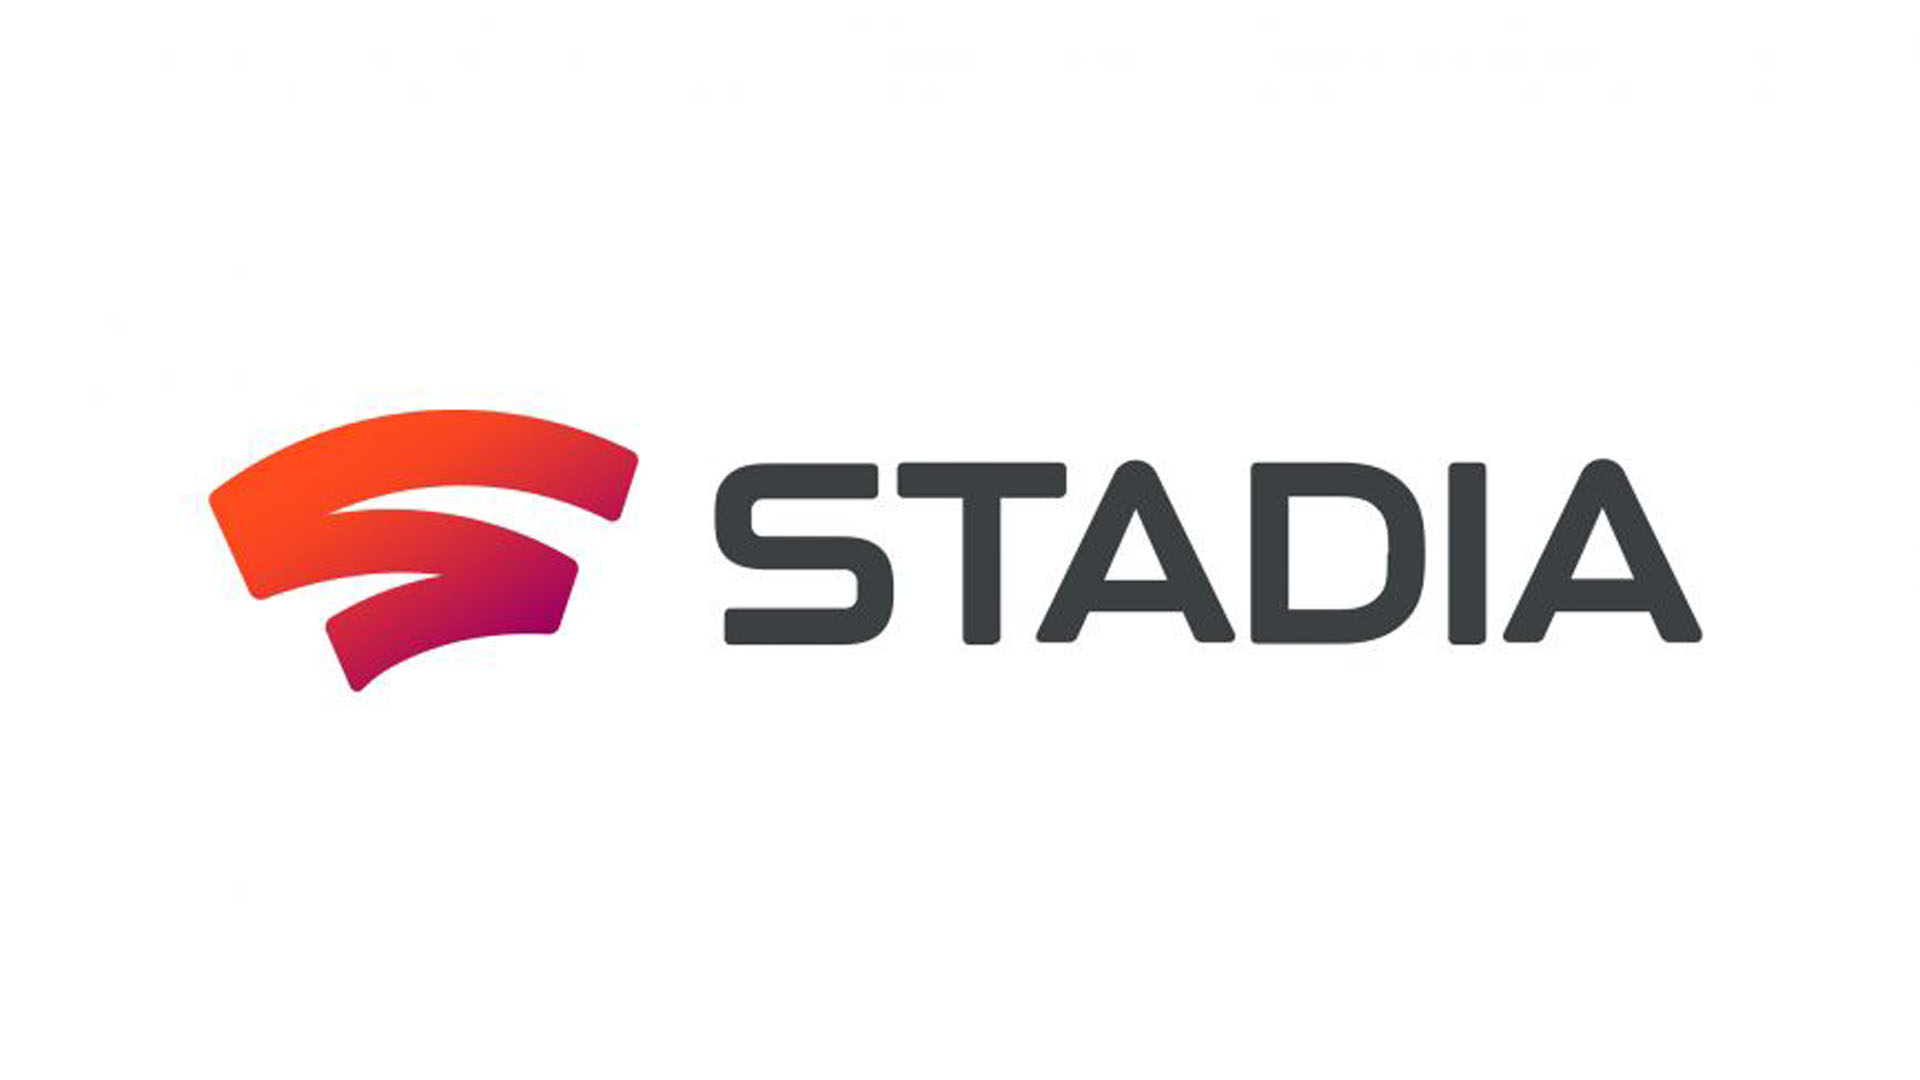 Google Stadia logo on a blurred background